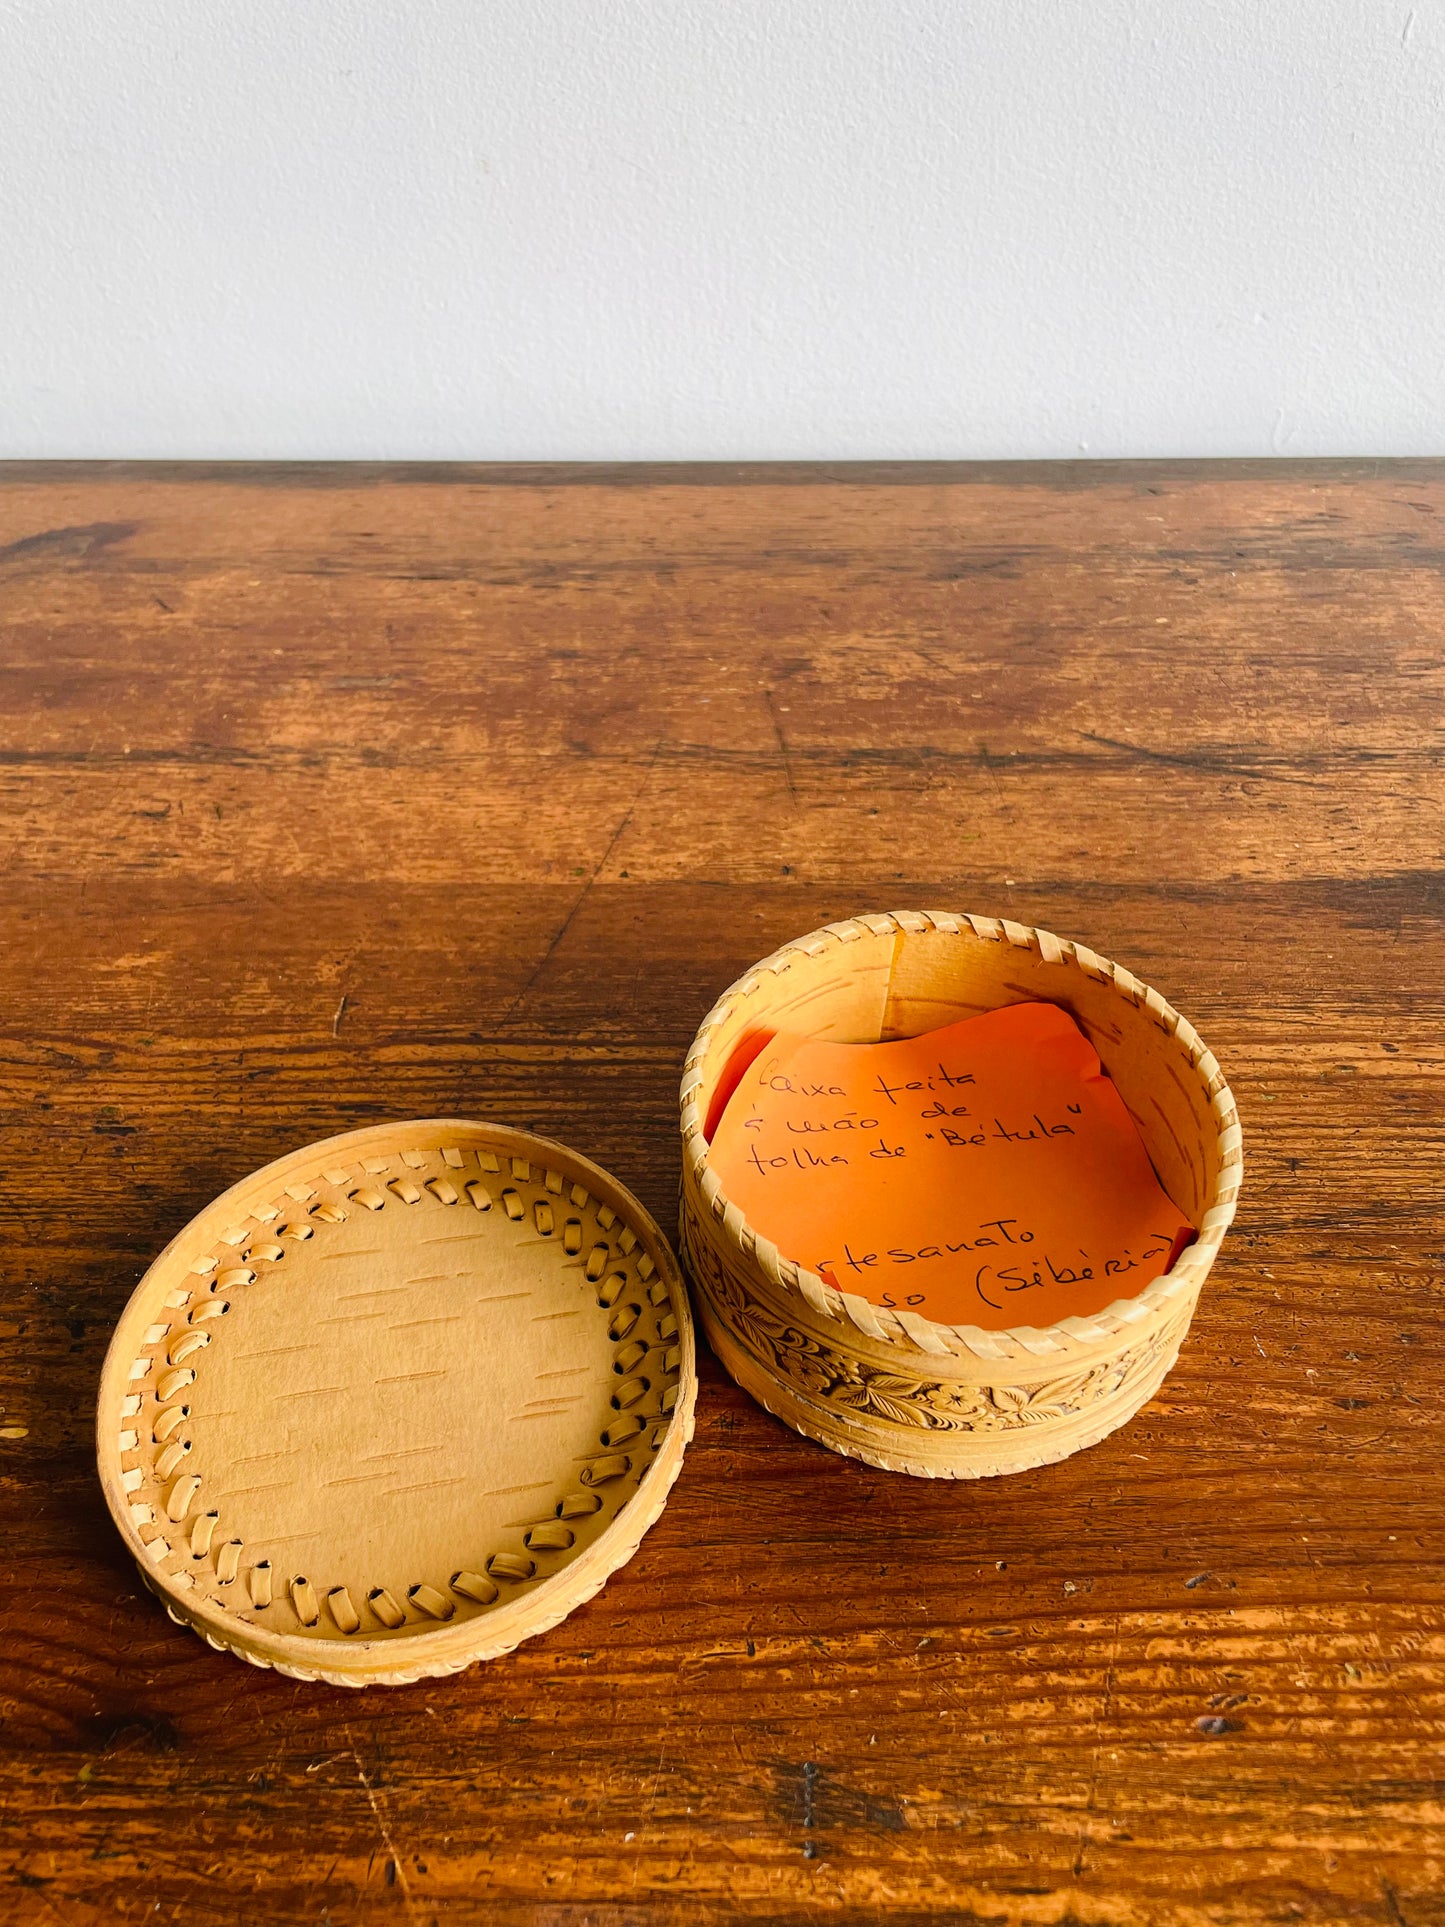 Handmade Round Birch Bark Trinket Box with Lid & Carved Botanical Designs - Found in Lisbon, Portugal